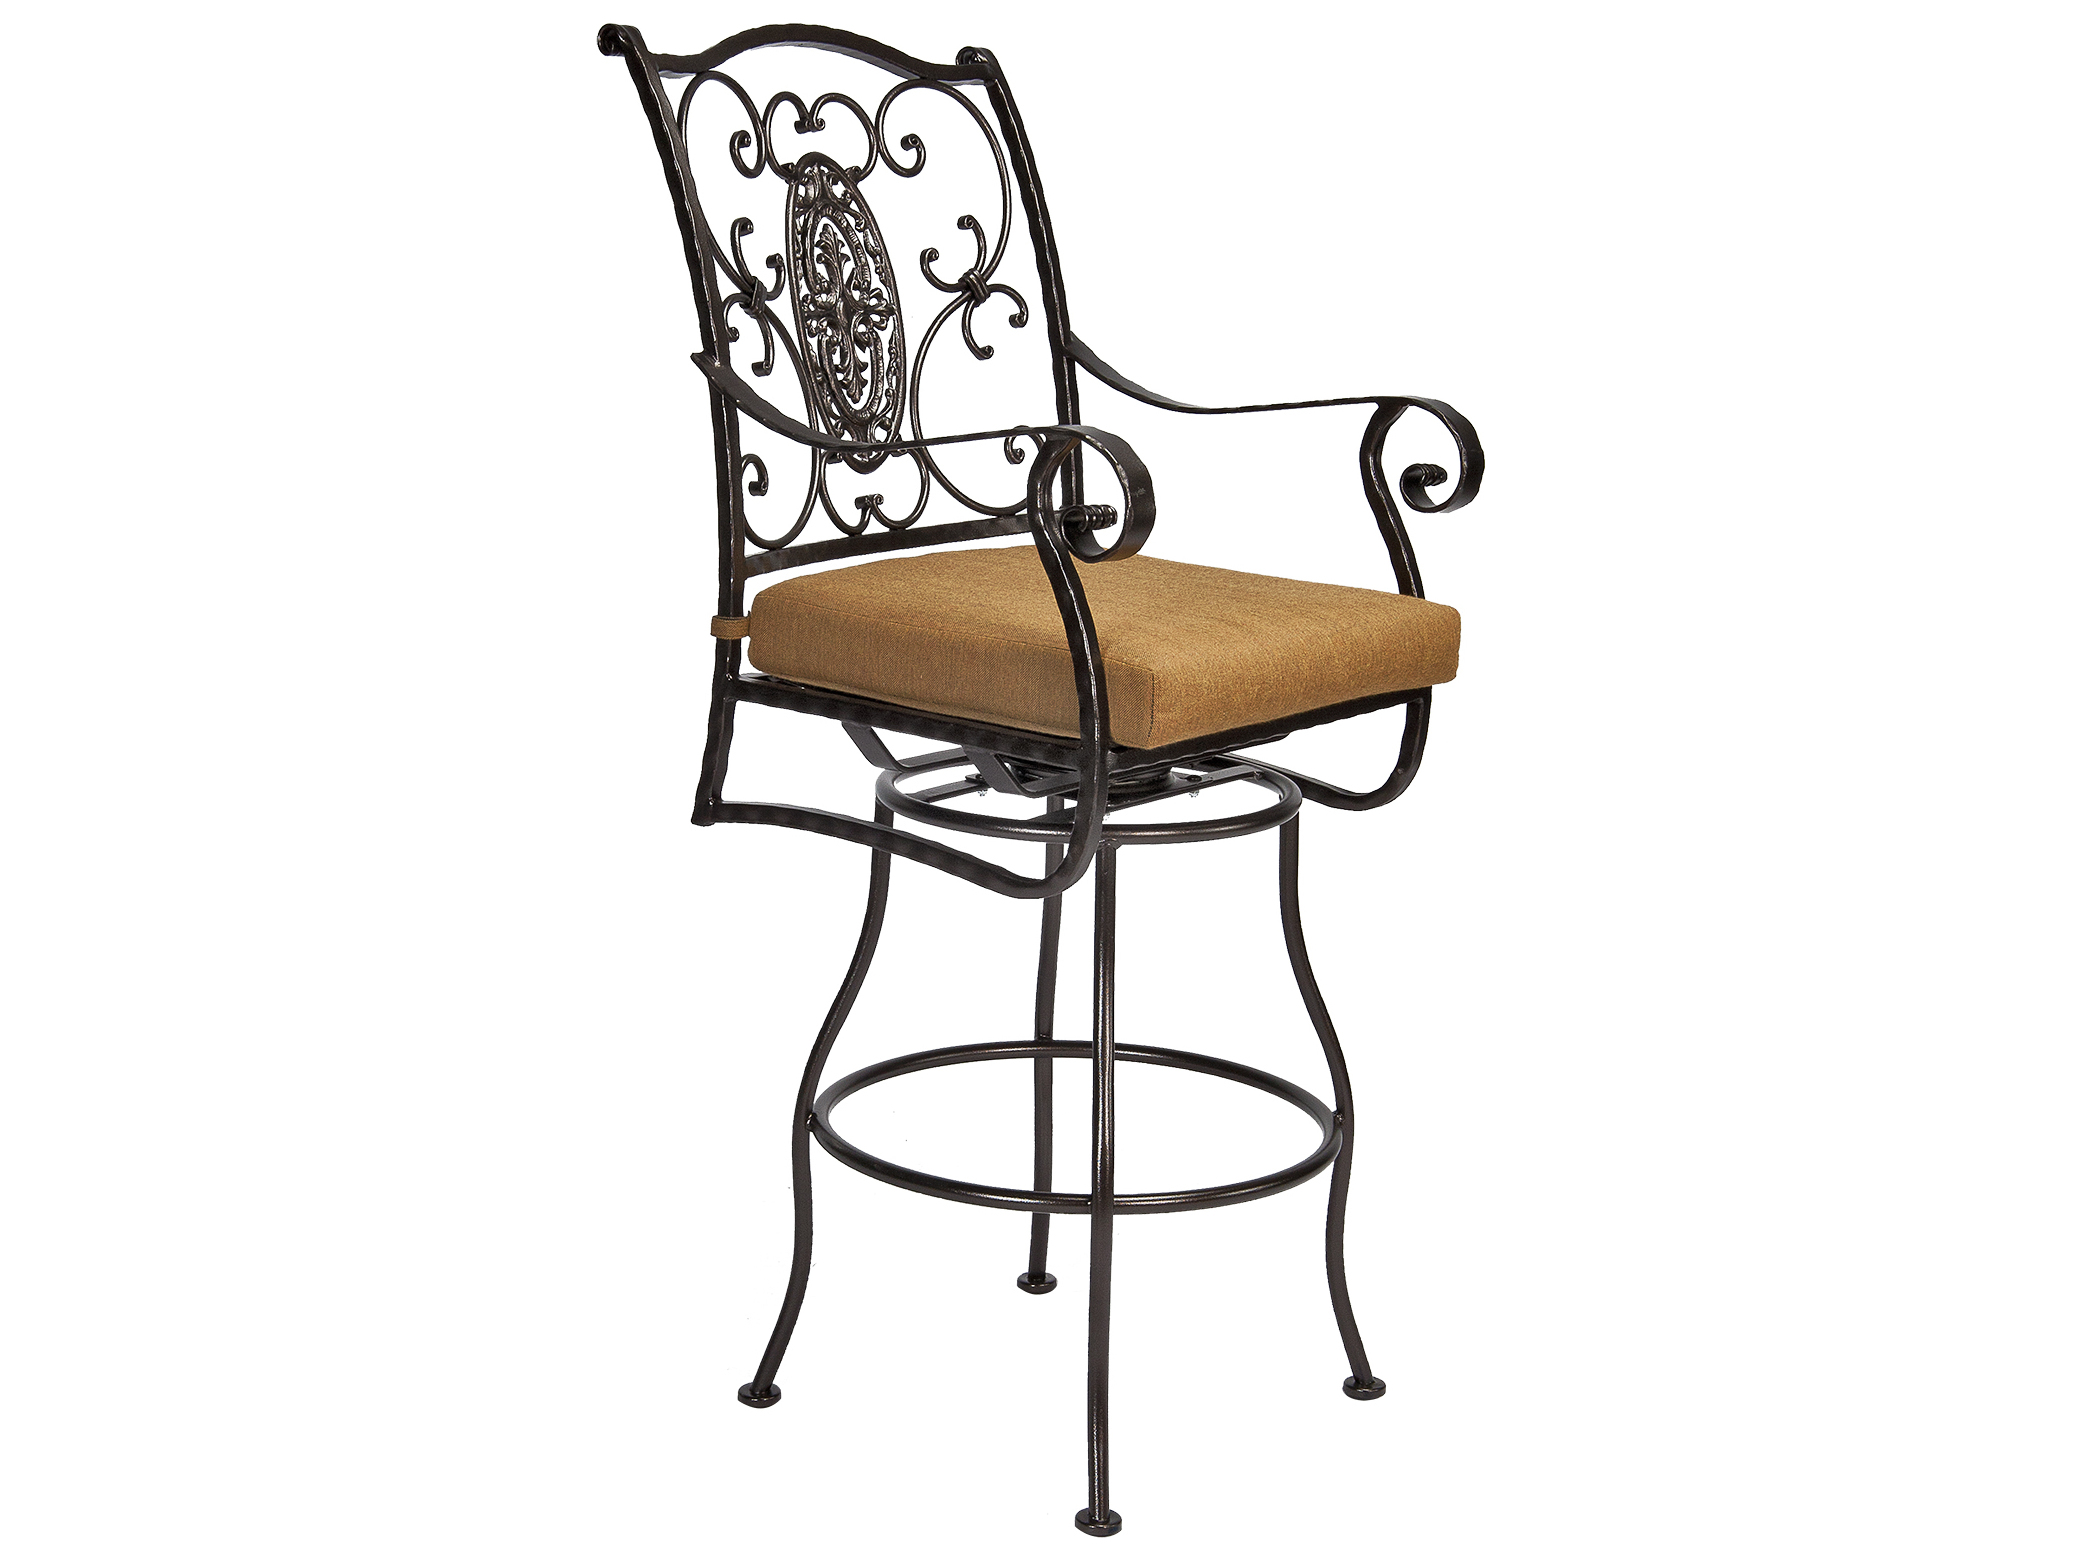 Ow Lee San Cristobal Wrought Iron, Wrought Iron Swivel Bar Stool Chairs